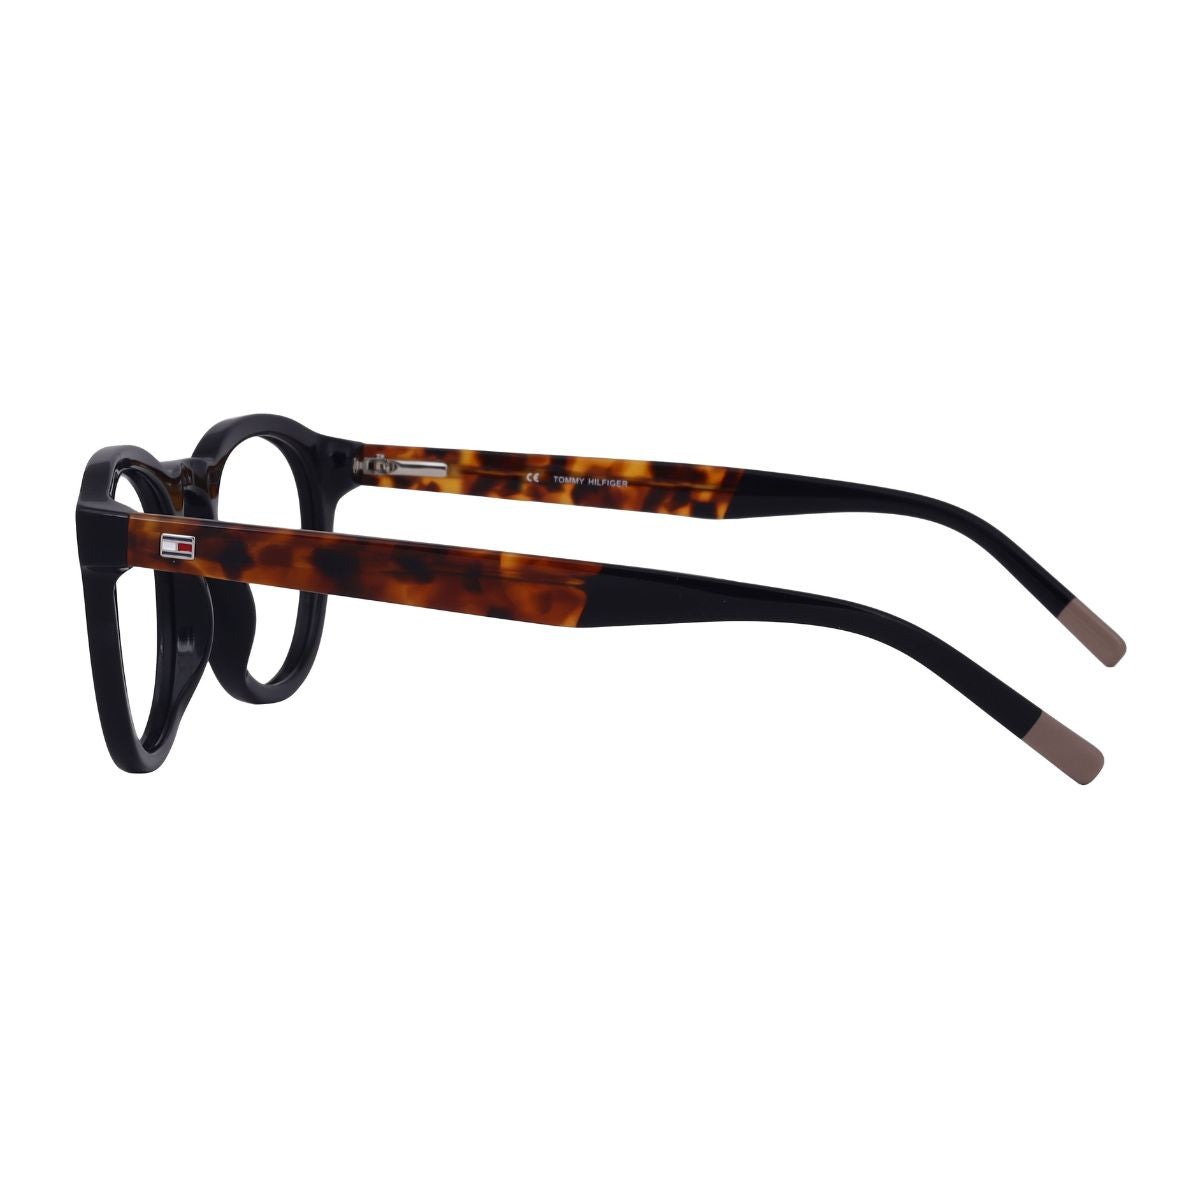 "shop Tommy Hilfiger 5225 C4 power glasses frame for men and women online at optorium"